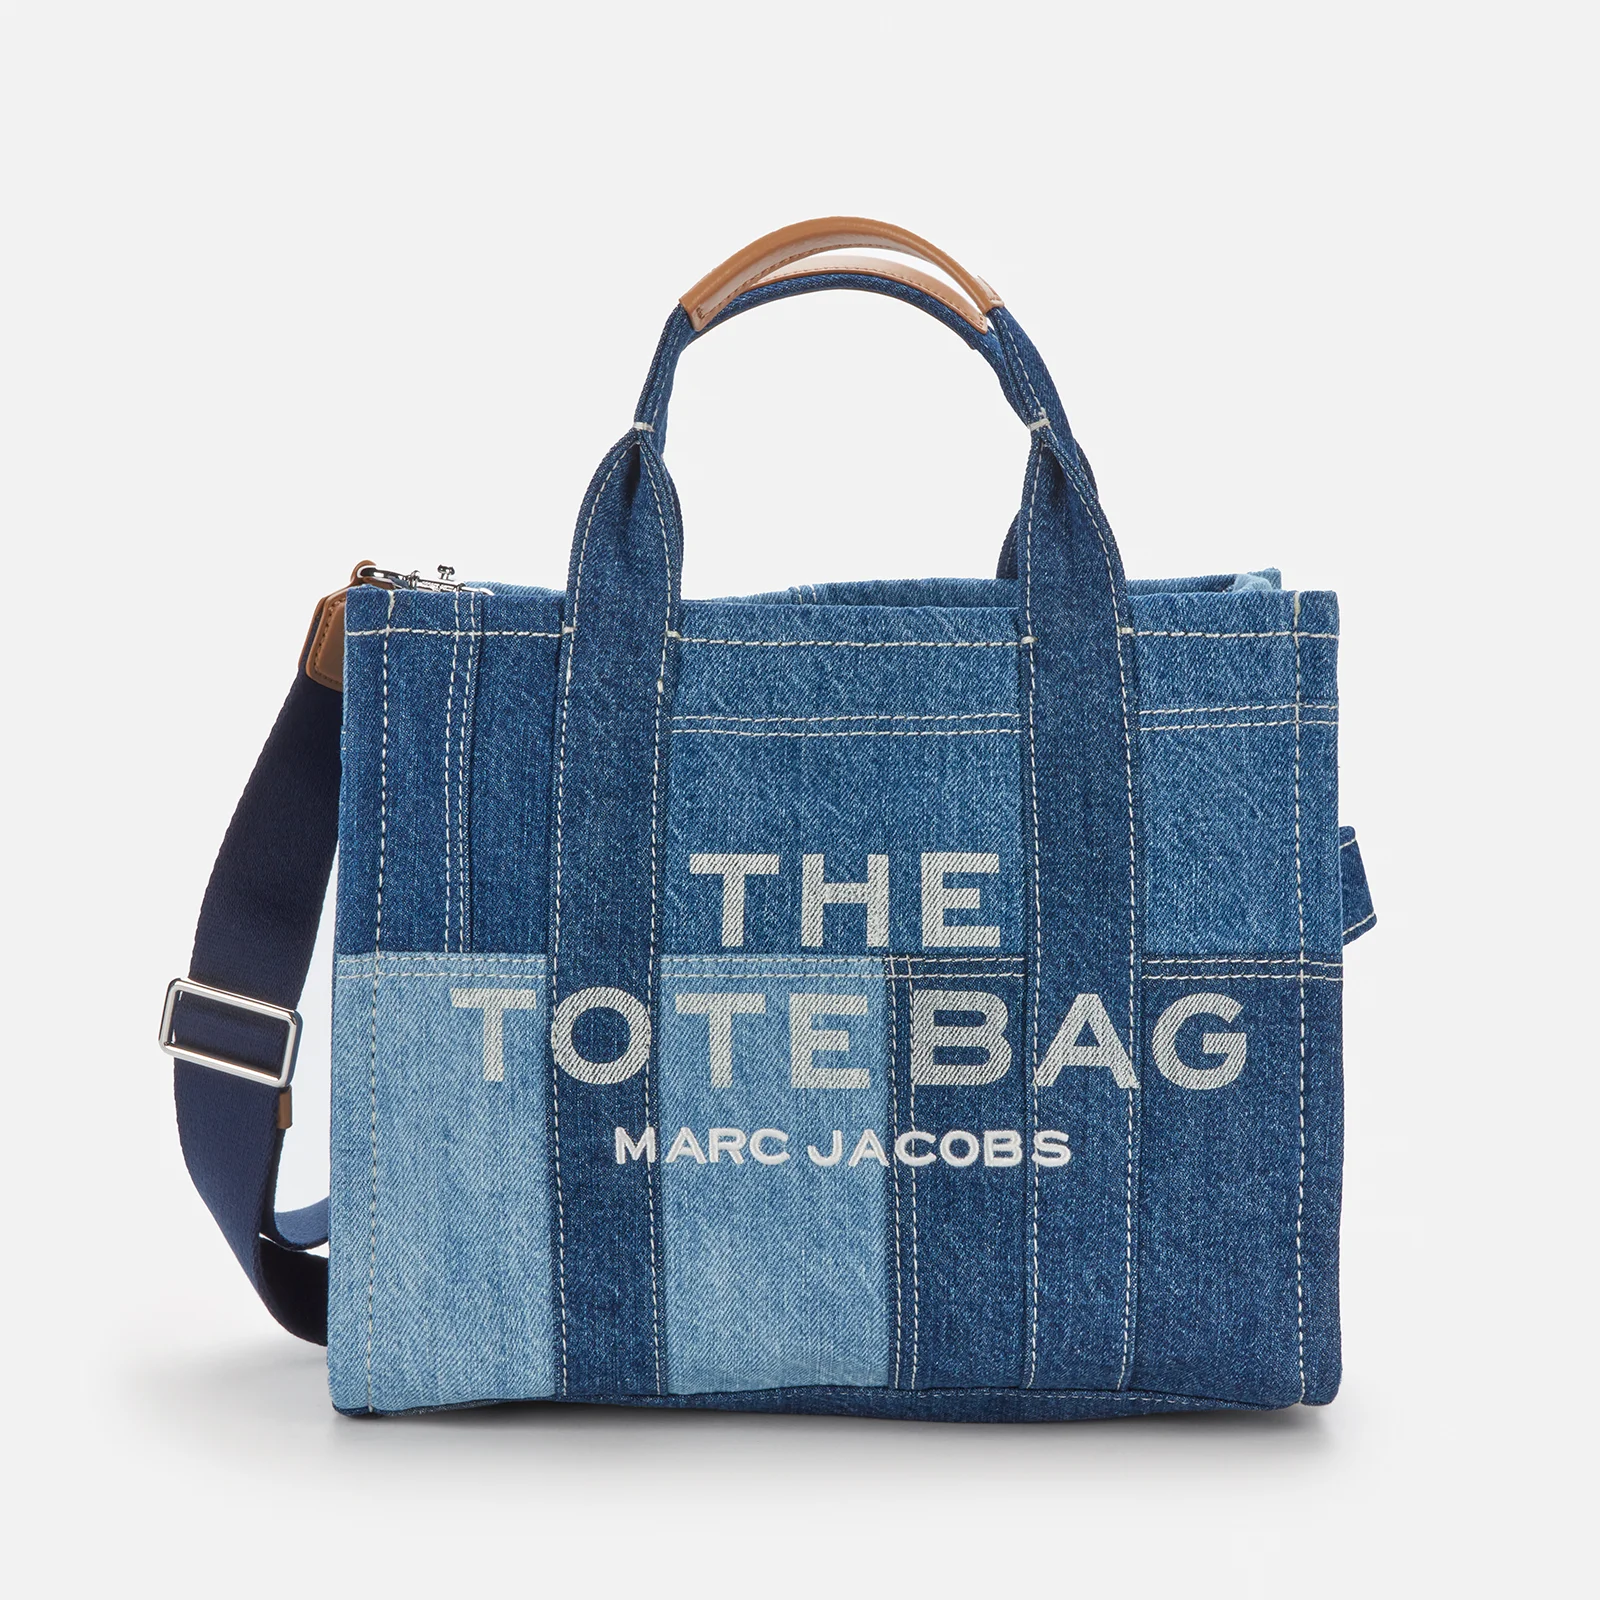 Marc Jacobs Women's The Denim Medium Tote Bag - Blue Denim Image 1